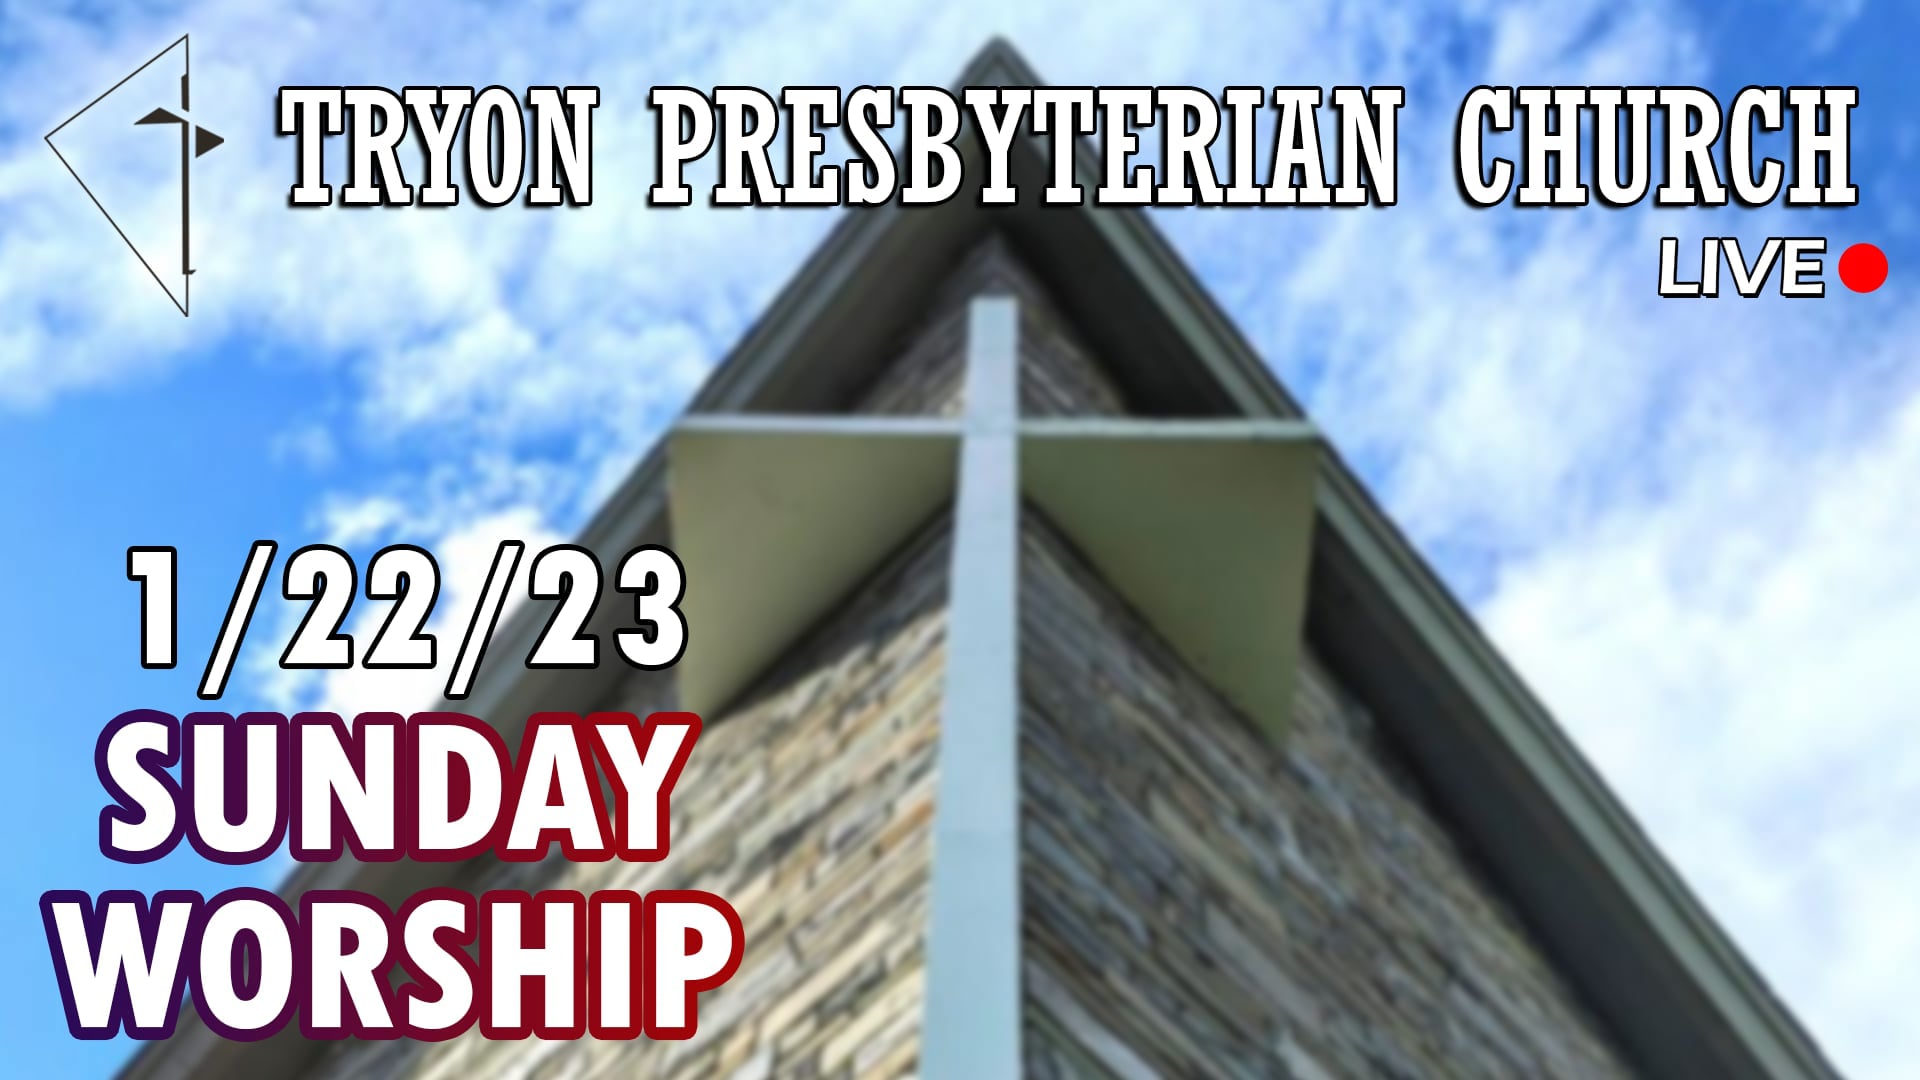 Tryon Presbyterian Church - Sunday Worship 1/22/23